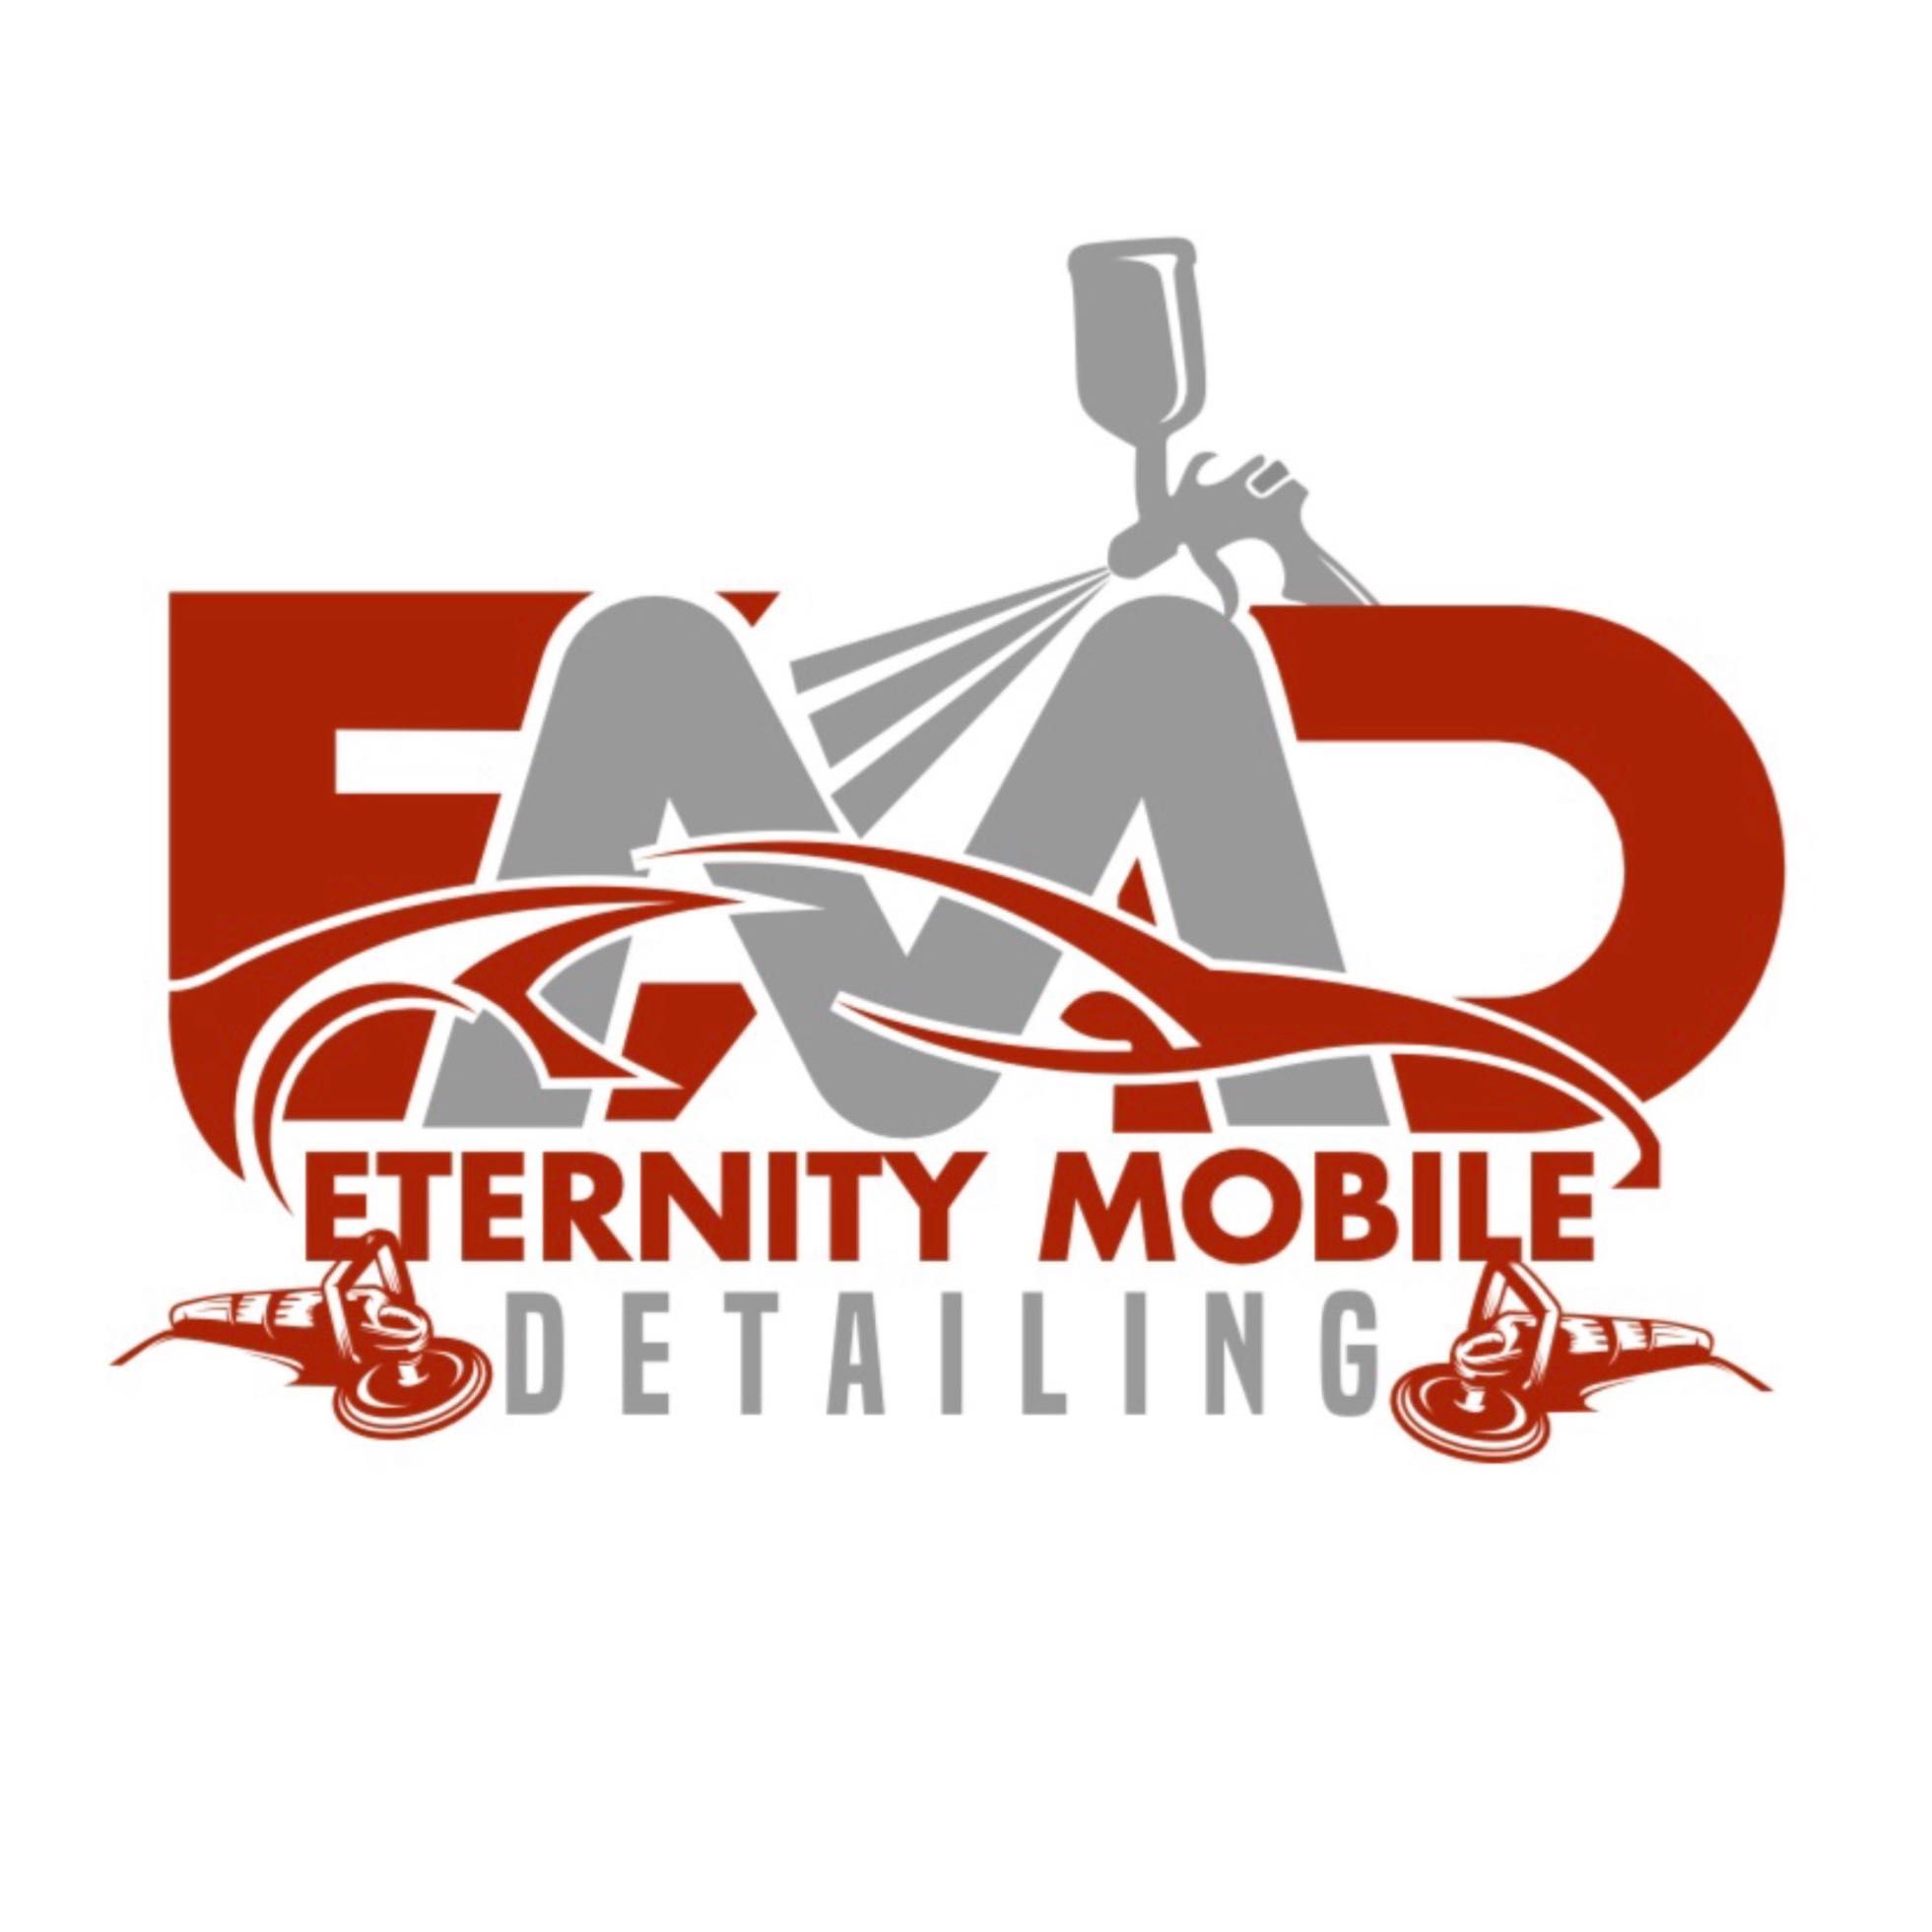 Eternity Mobile Detailing, 1432 Walnut St, South Plainfield, 07080